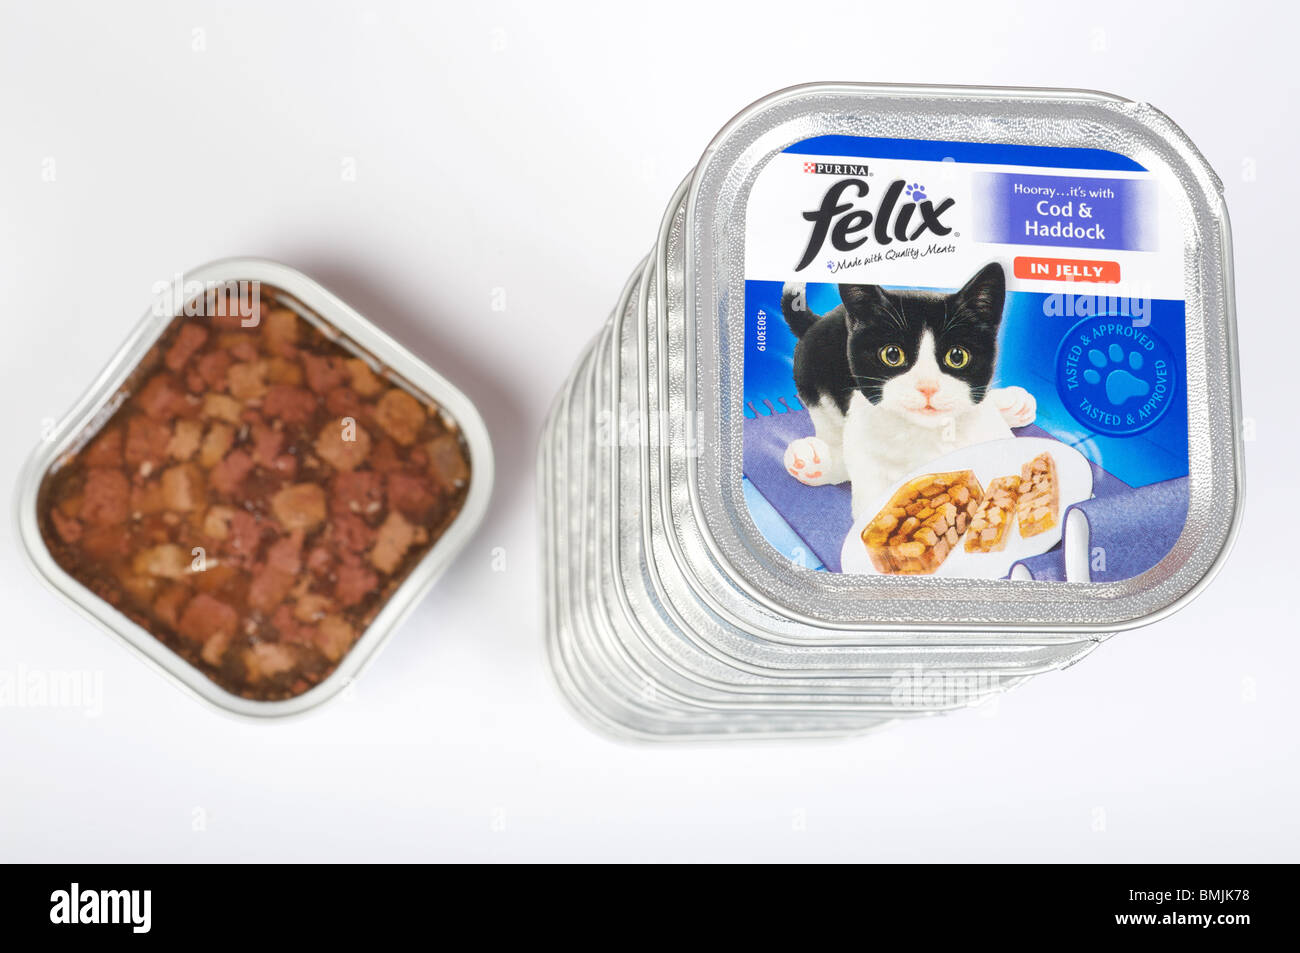 Felix cod and haddock cat food by Purina Stock Photo